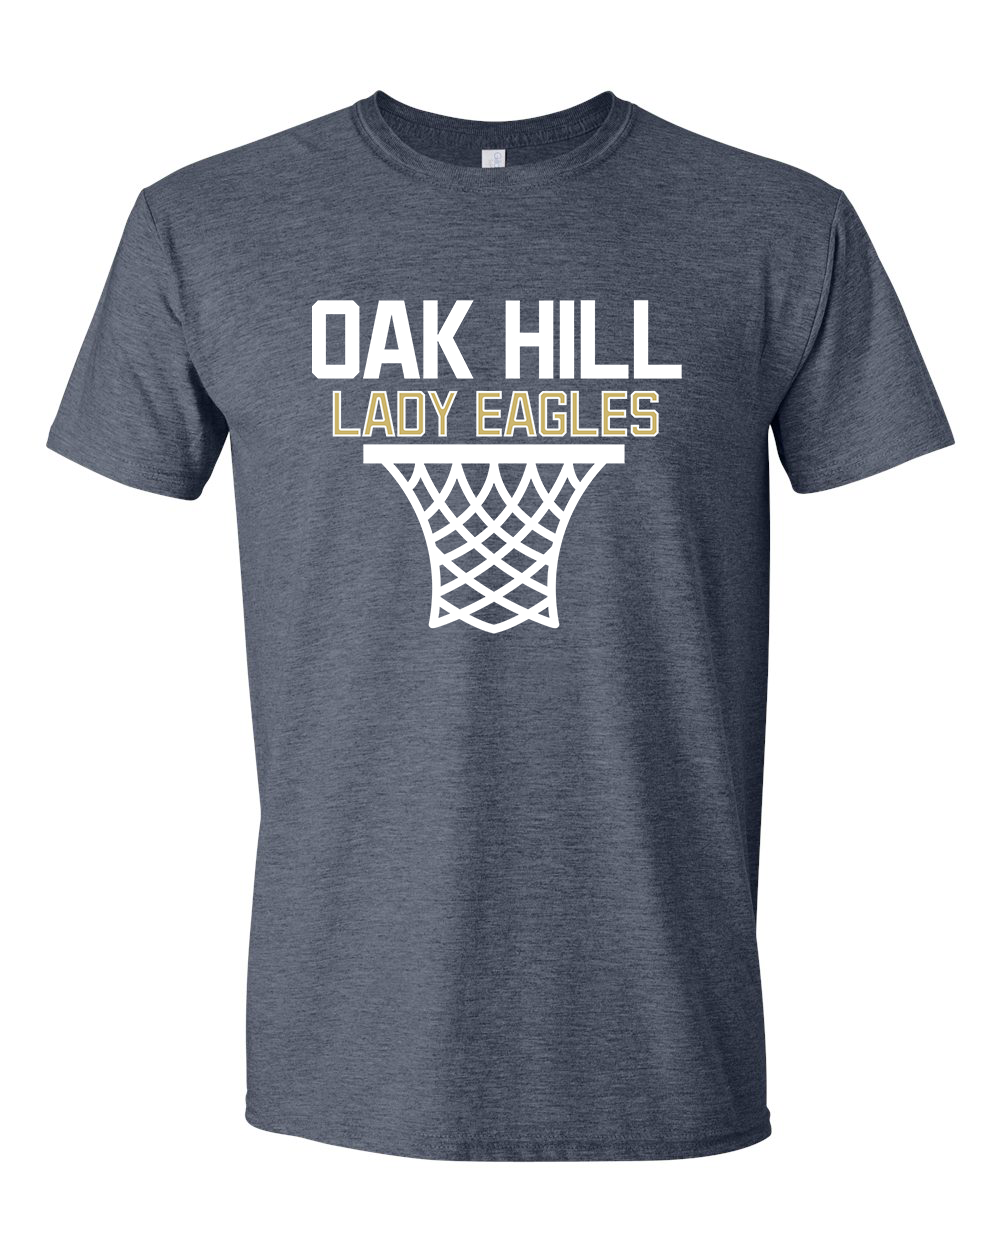 Oak Hill Lady Eagles Basketball Tshirt - Navy Heather